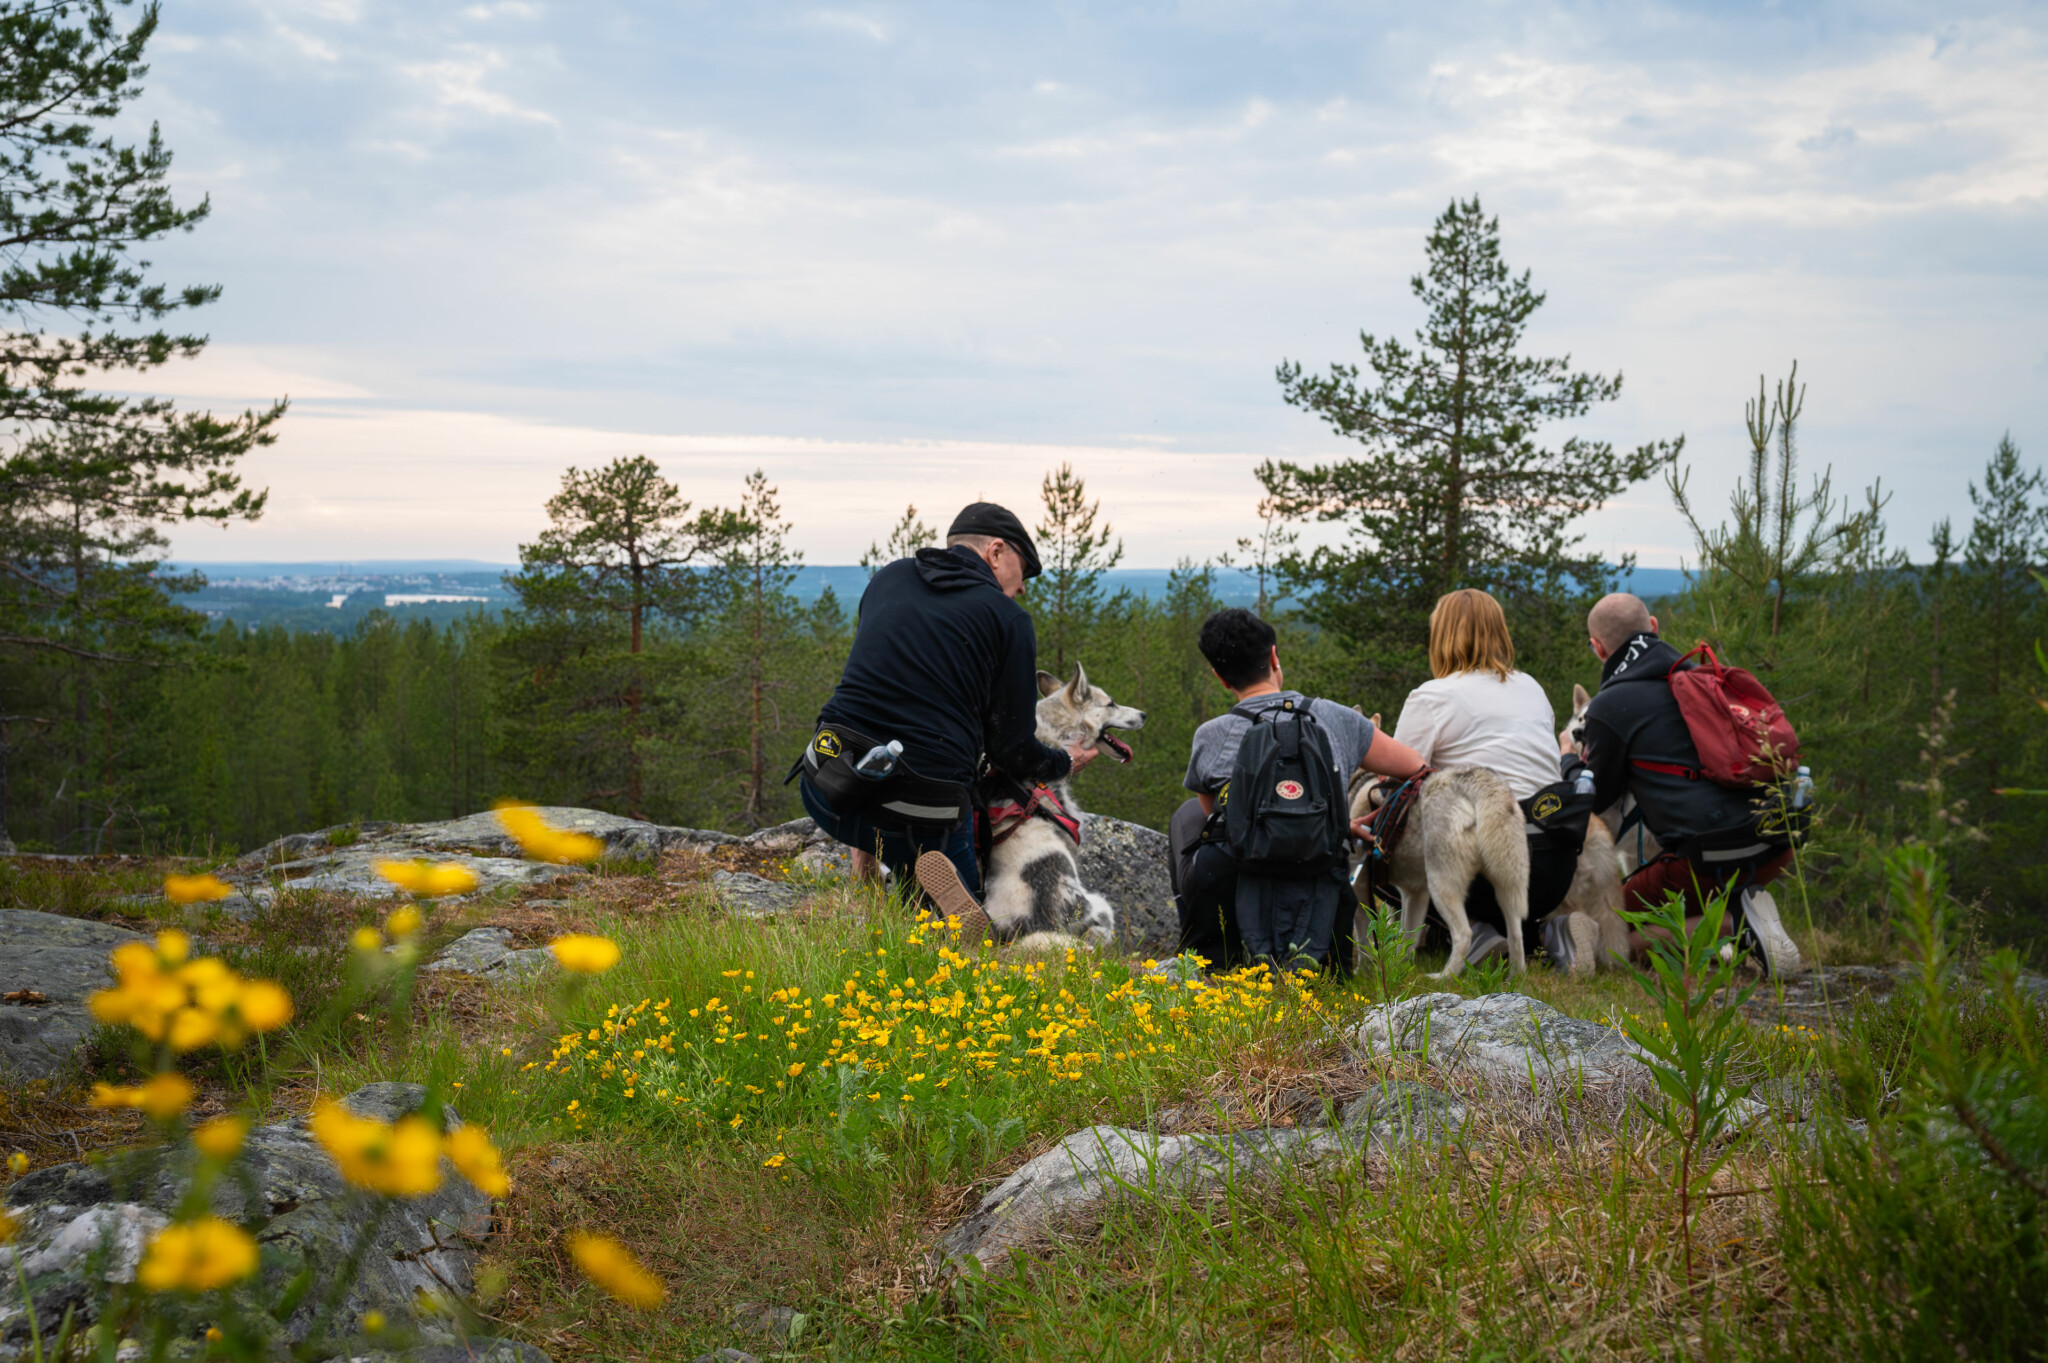 Midnight Sun Tours in 24 Hour Light - Visit Rovaniemi